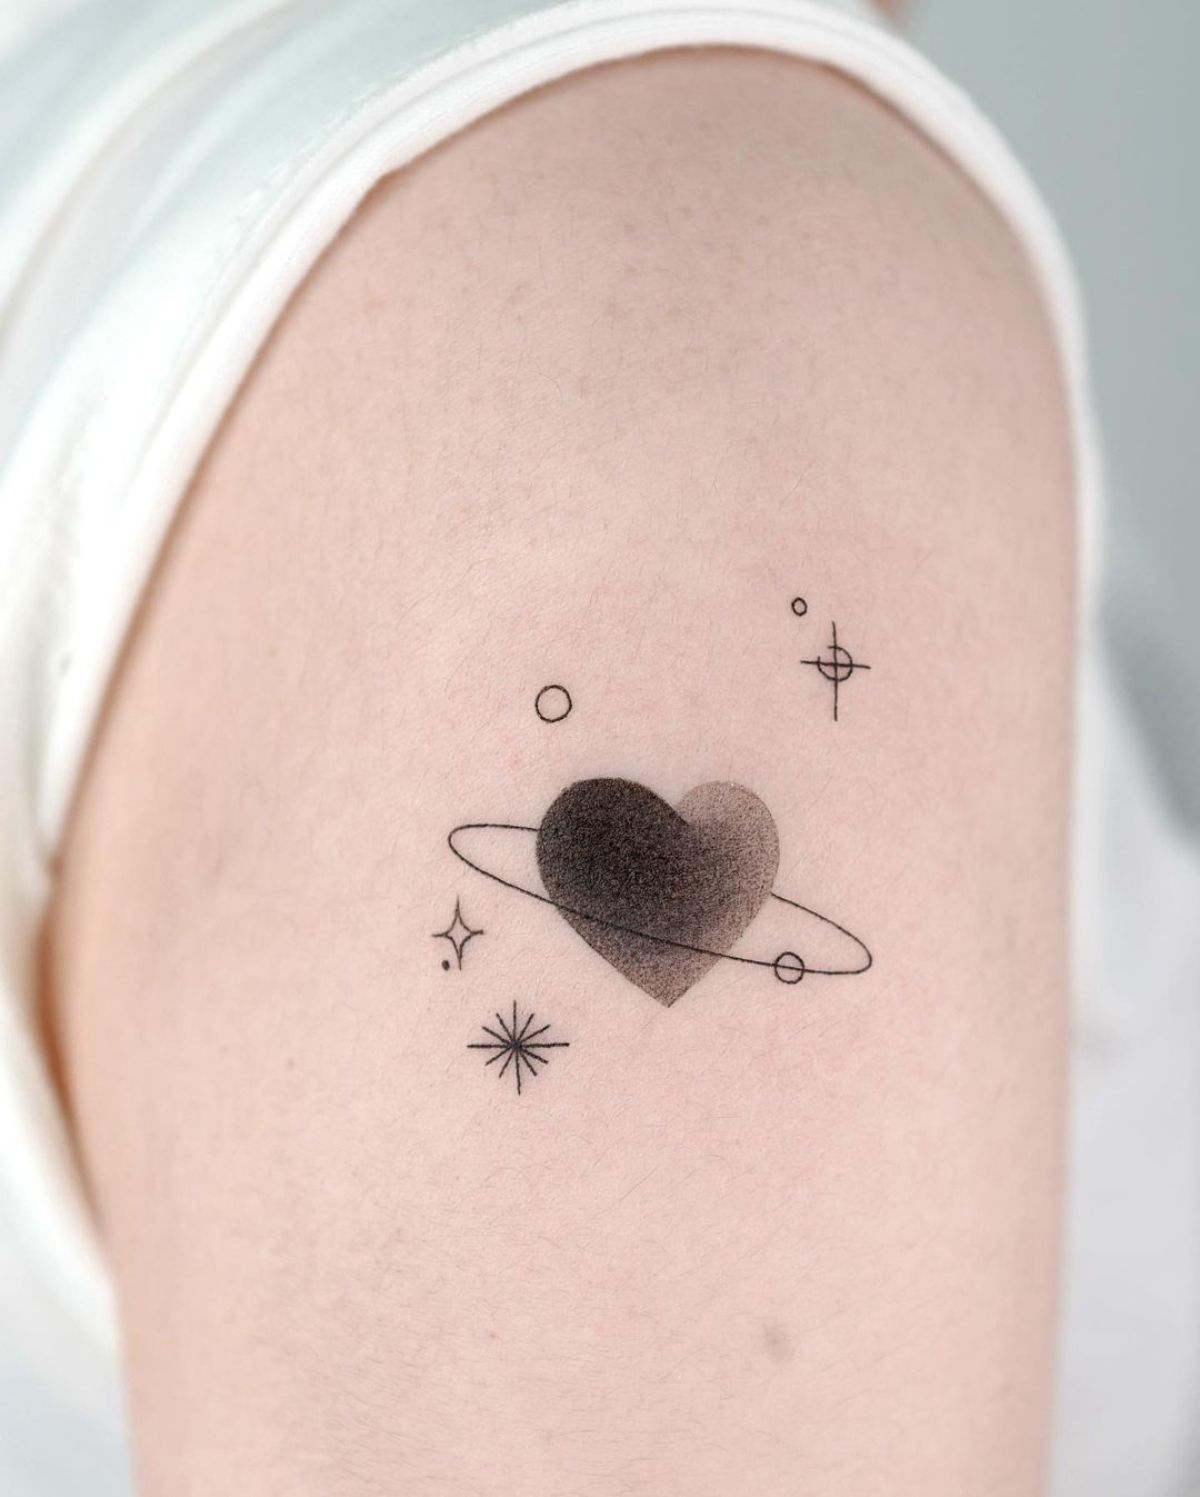 Minimalistic style Jupiter planet symbol tattooed on